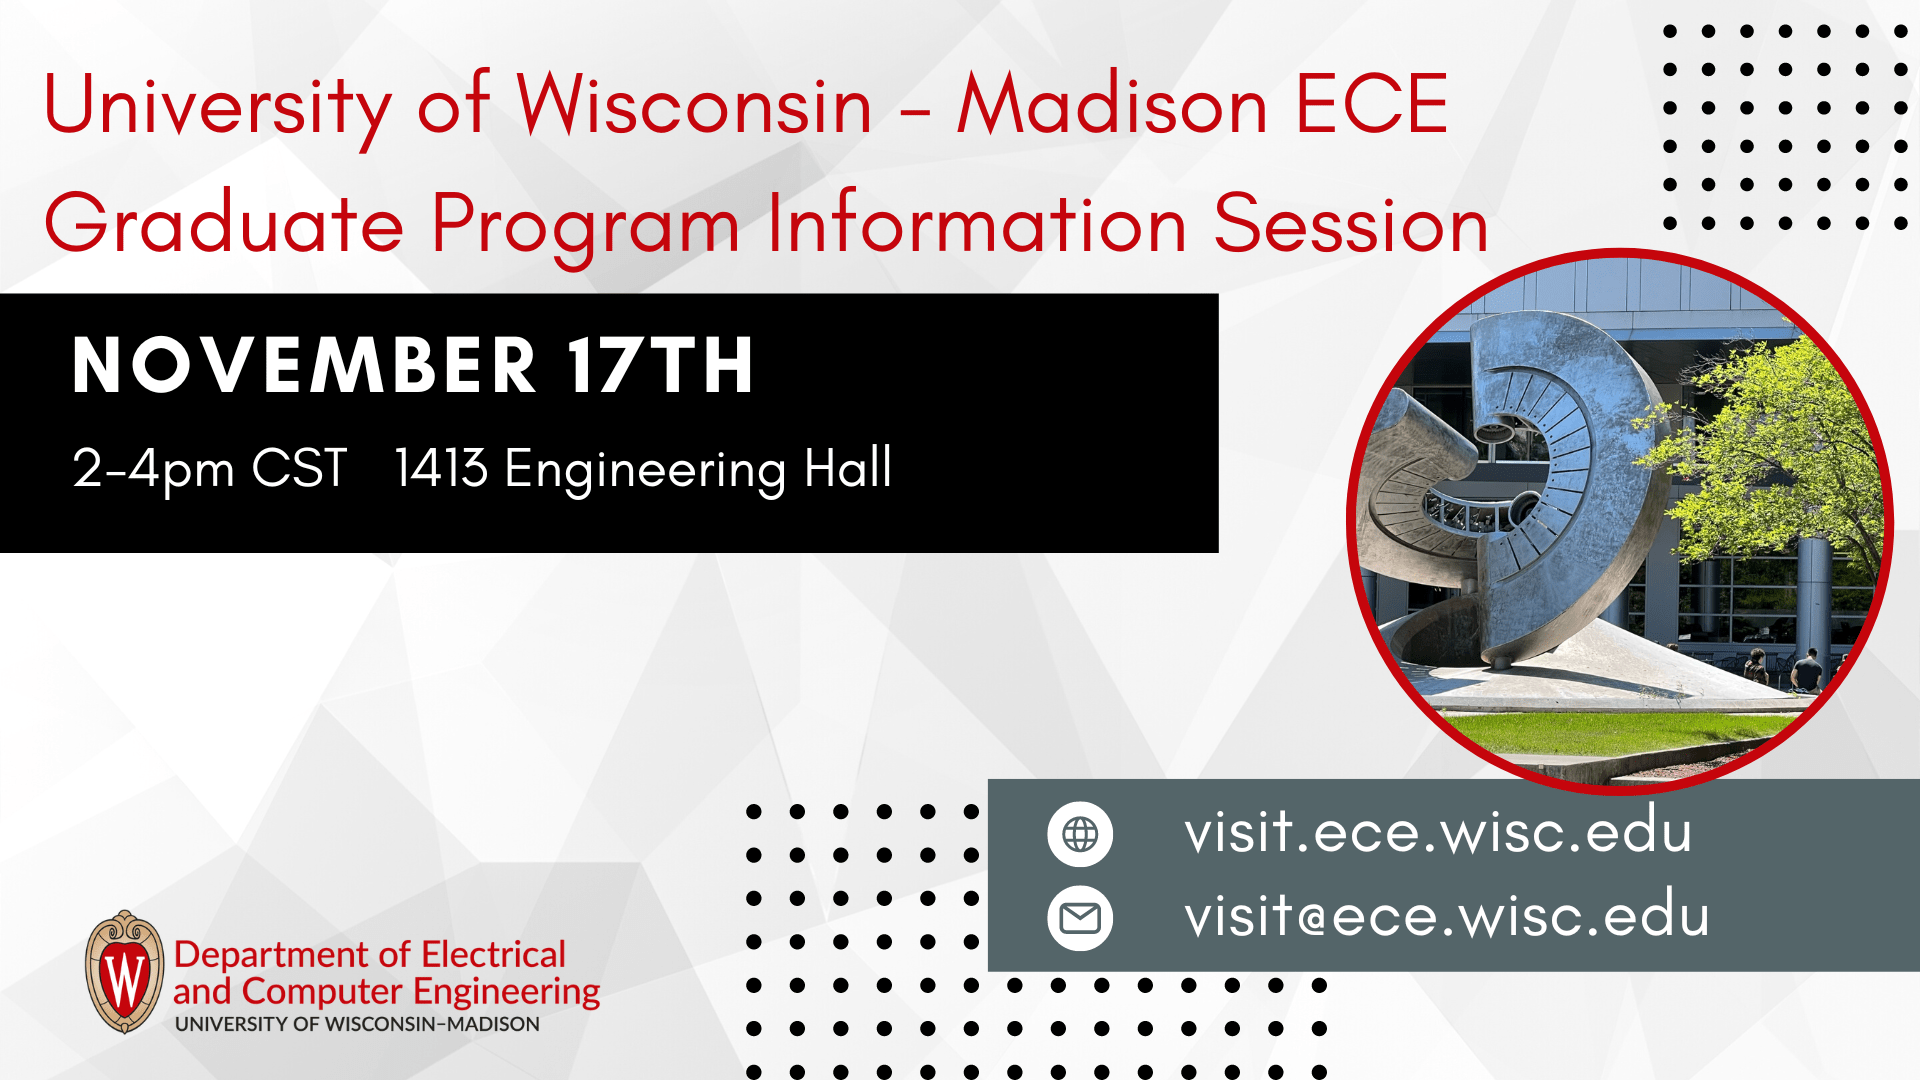 UW-ECE Graduate Program Information Session, November 17th, 2-4pm CST, 1413 Engineering Hall, visit.ece.wisc.edu, visit@ece.wisc.edu